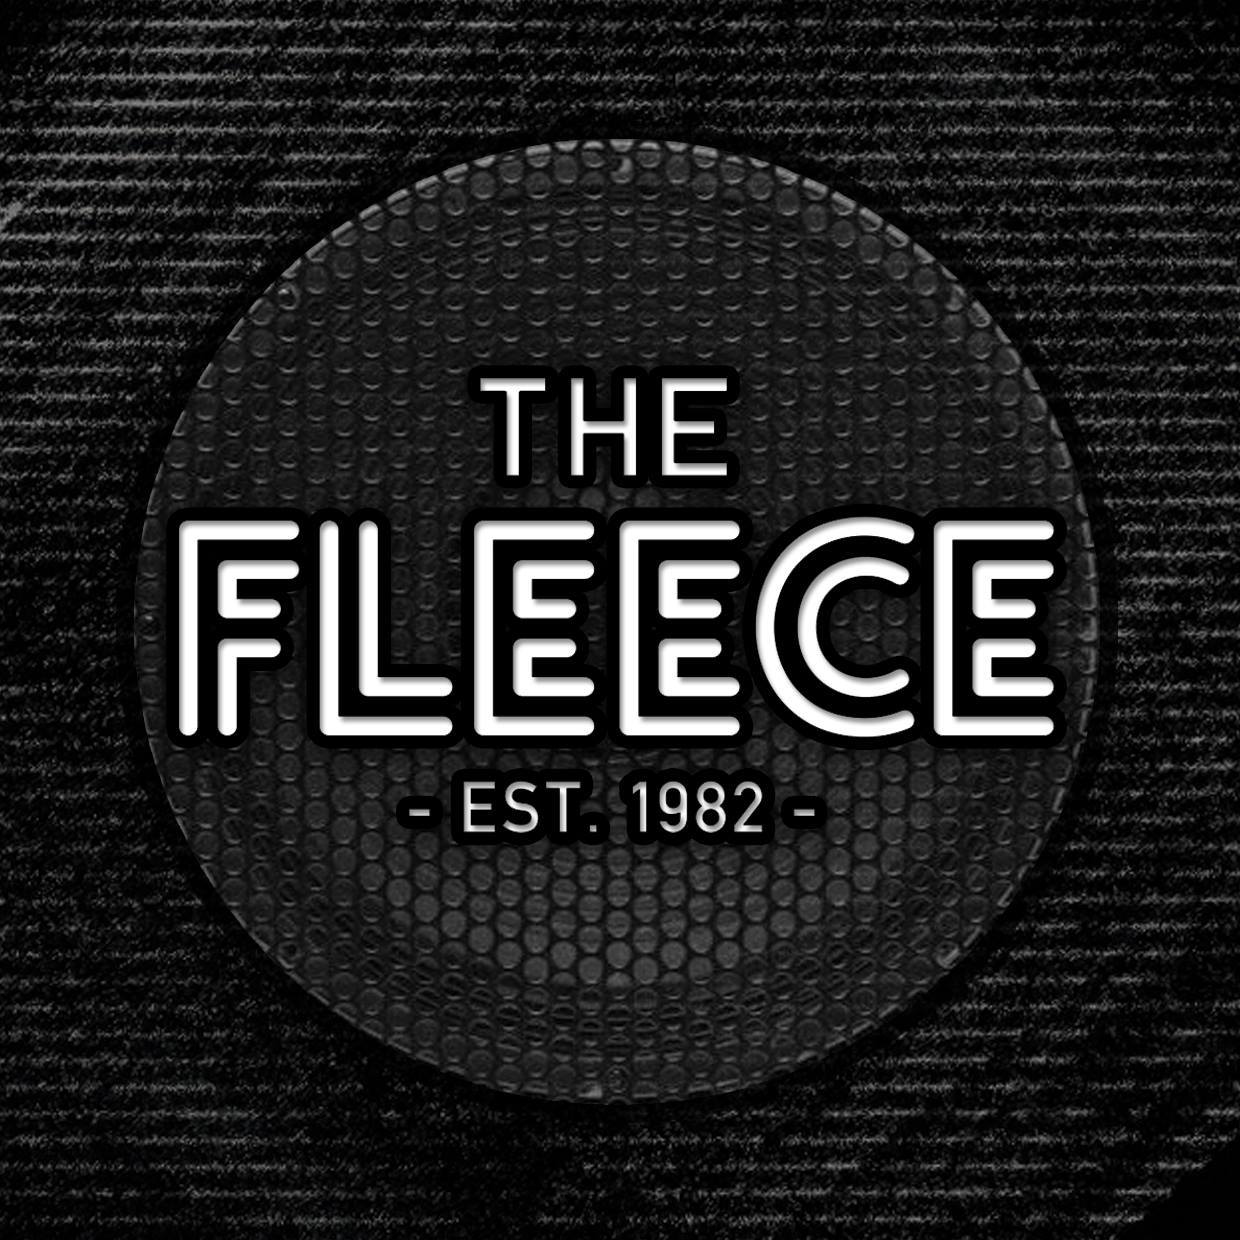 The Fleece Tickets